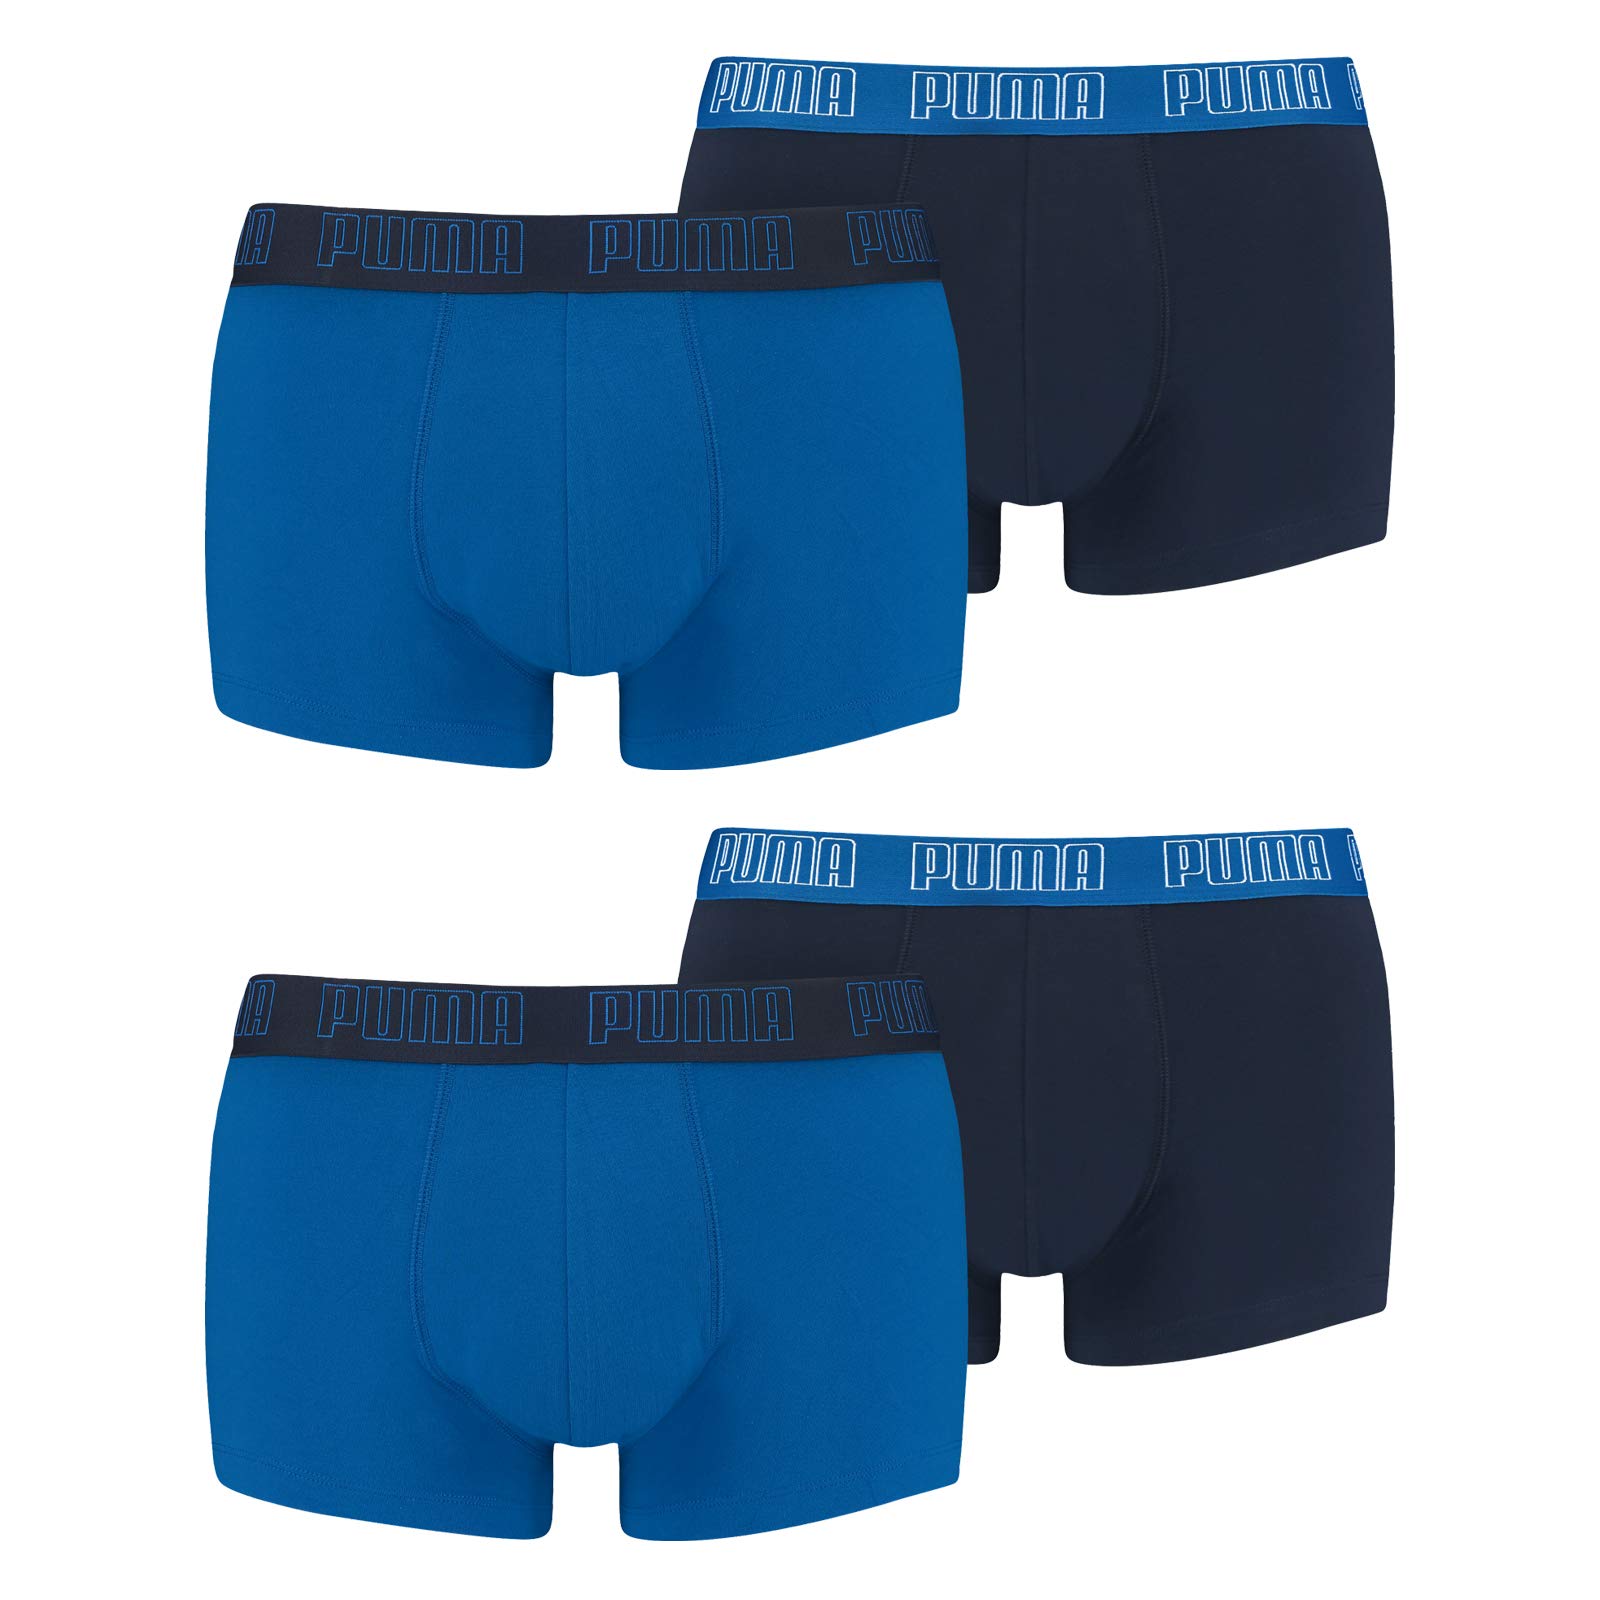 PUMA Herren Shortboxer Unterhosen Trunks 4er Pack, Wäschegröße:XL, Artikel:-003 True Blue